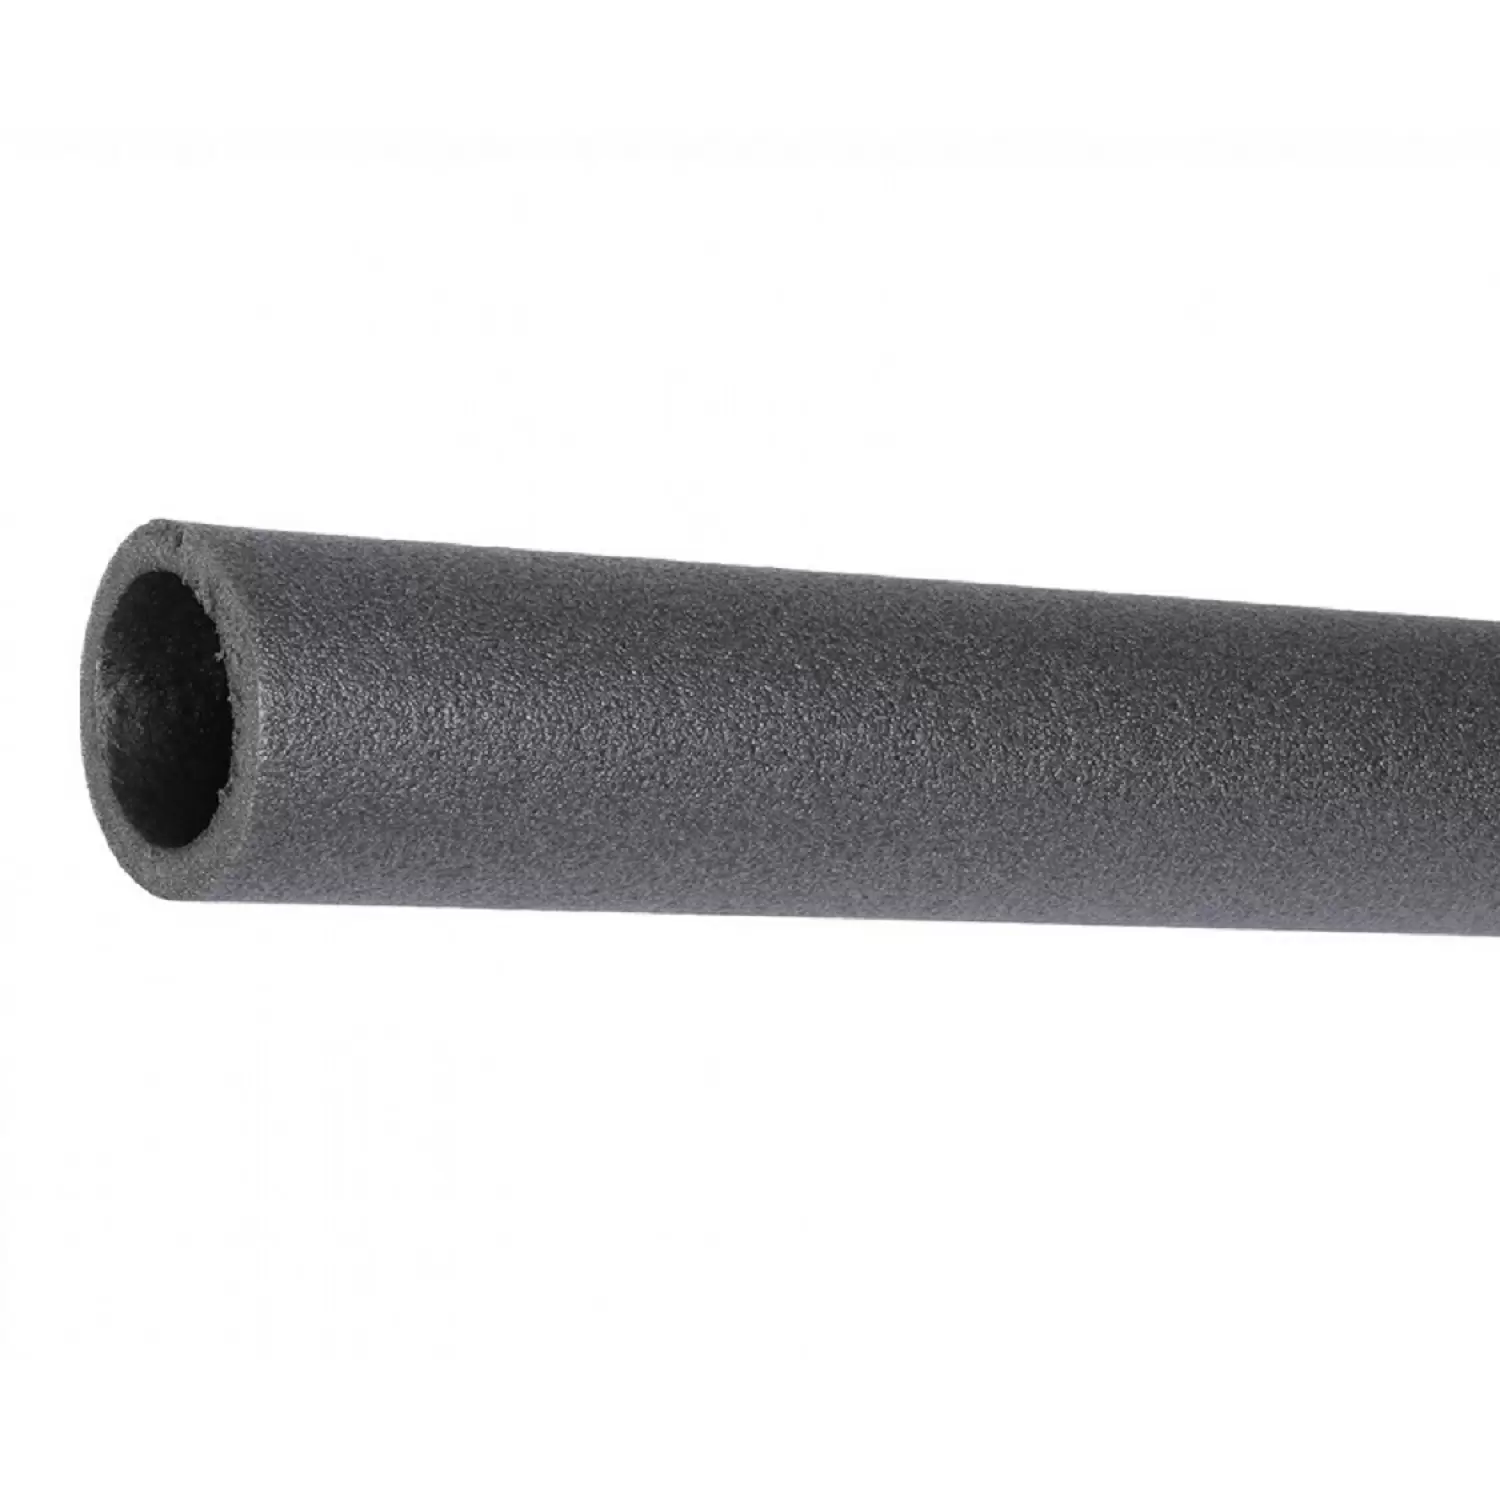 Теплоизоляция Энергофлекс супер 28/6 для труб диаметром 25 мм, трубка 2 м